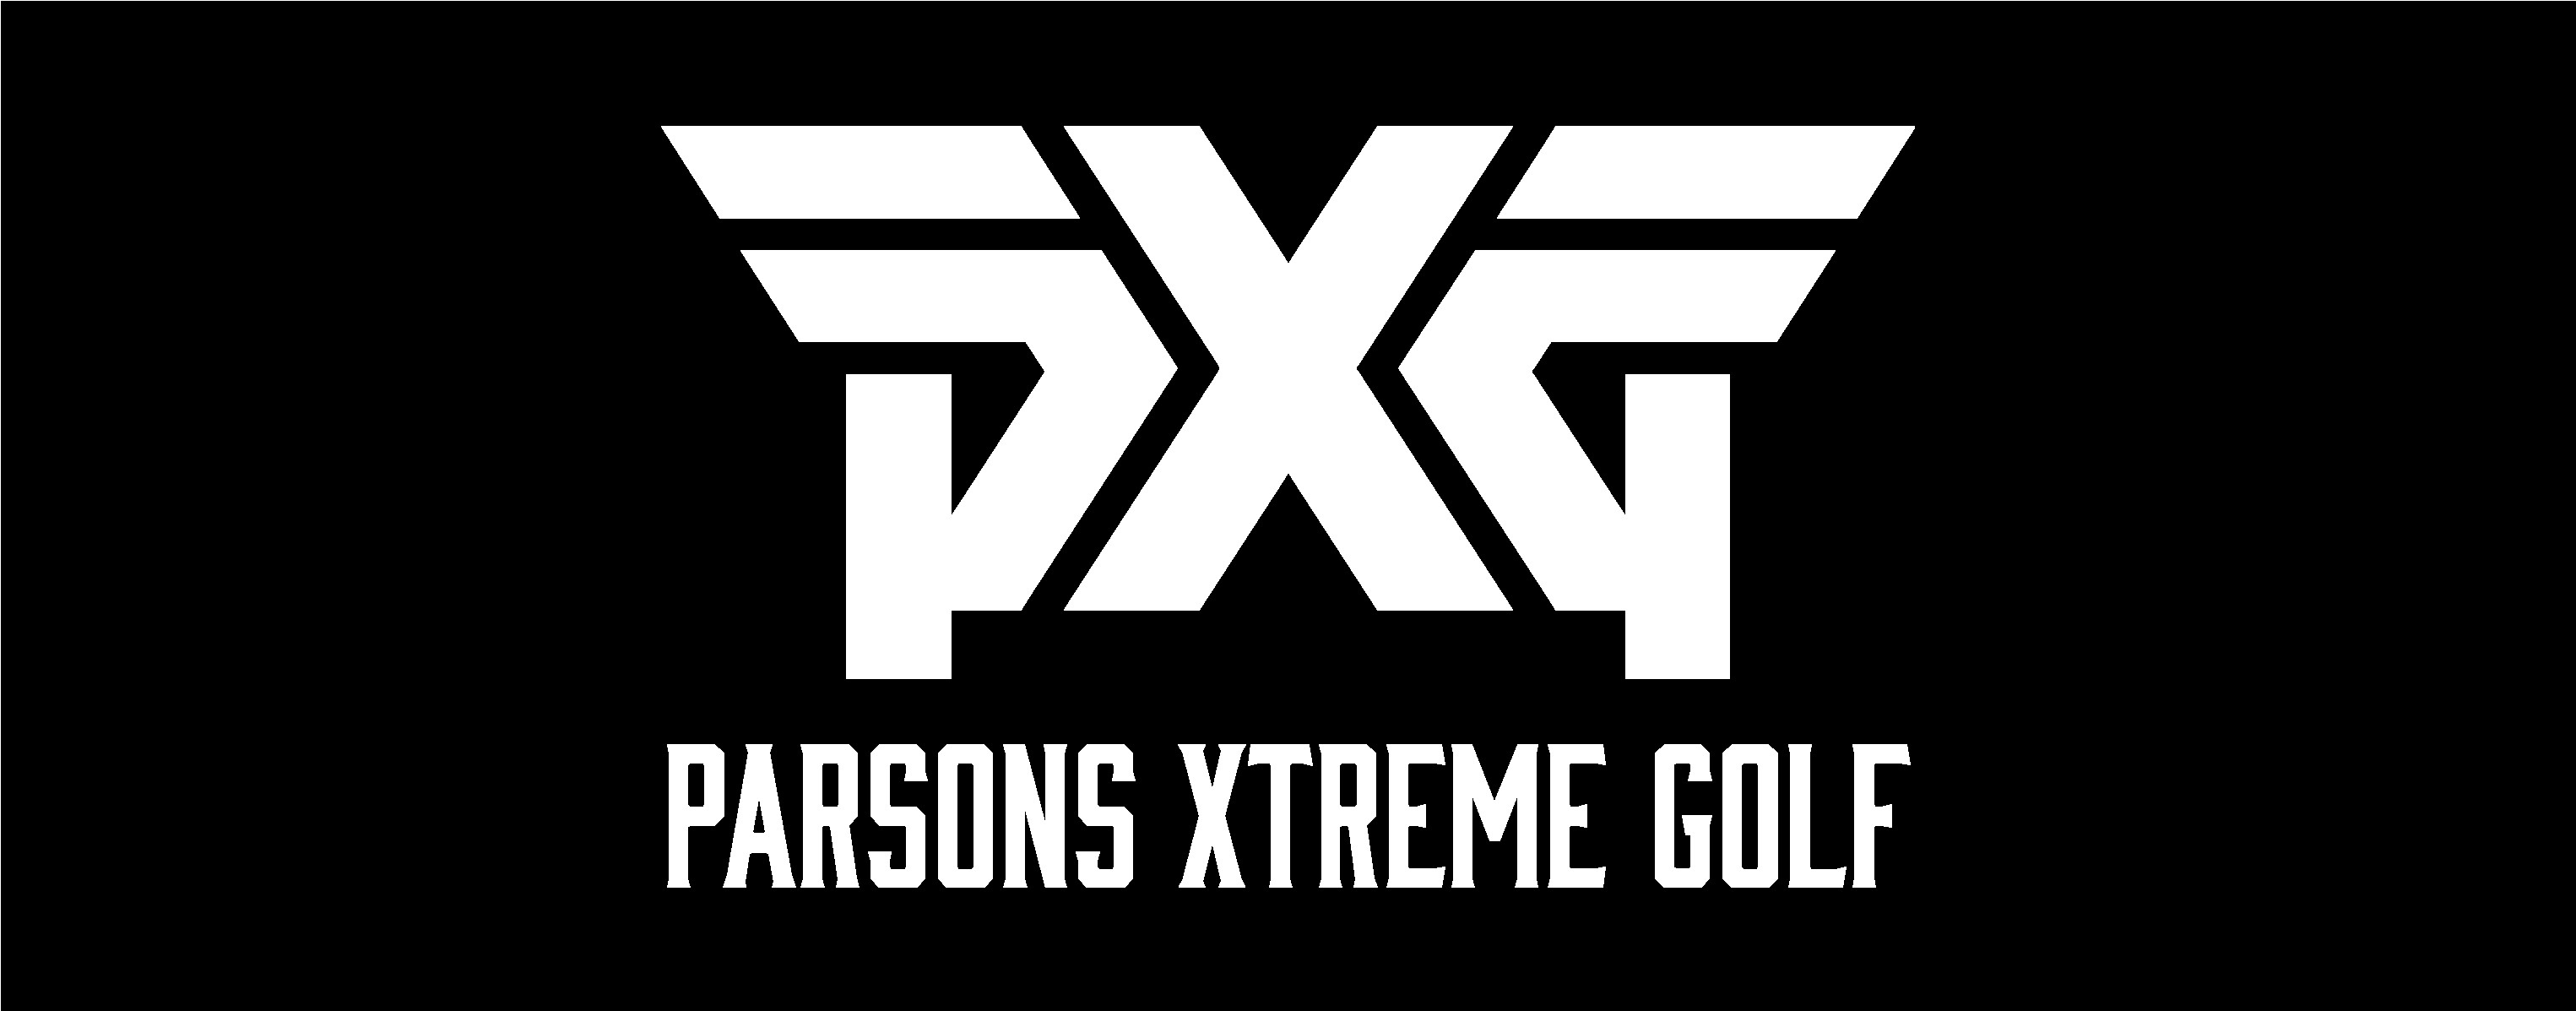 PXG-Parsons-Xtreme-Golf-White-Black-Stretch-Logo-1-JPEG.jpg